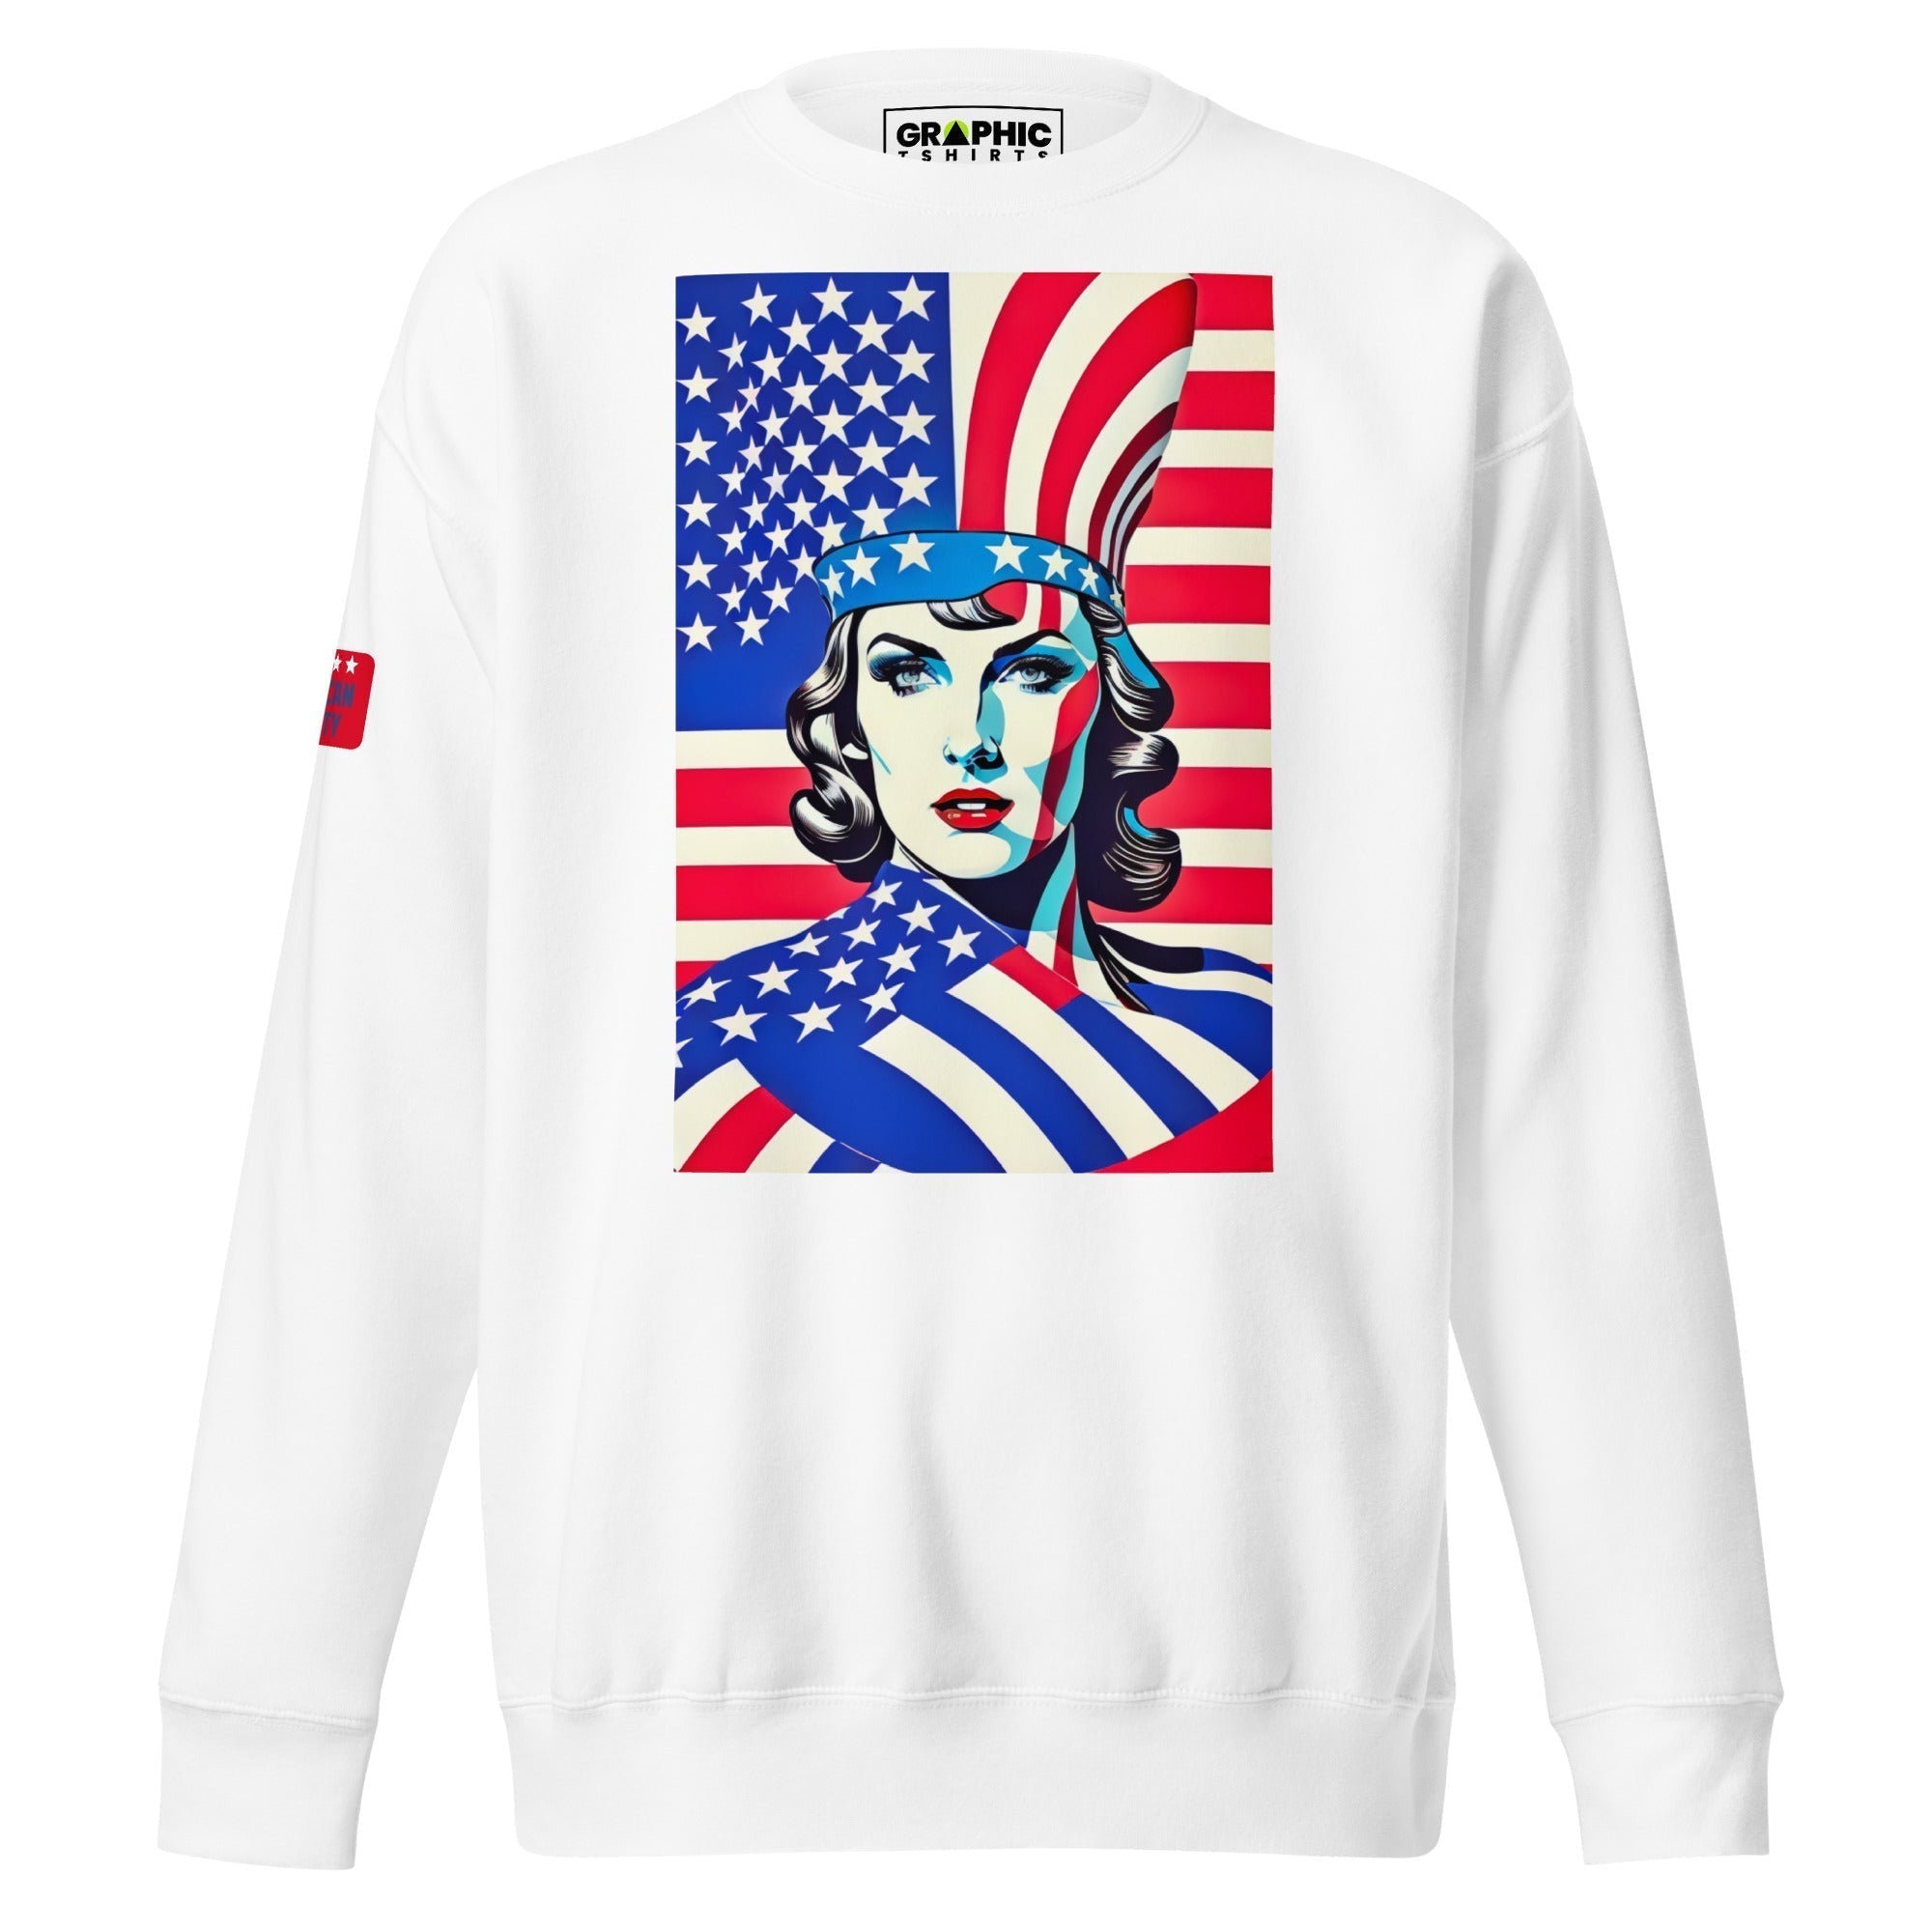 Unisex Premium Sweatshirt - American Liberty Series v.18 - GRAPHIC T-SHIRTS